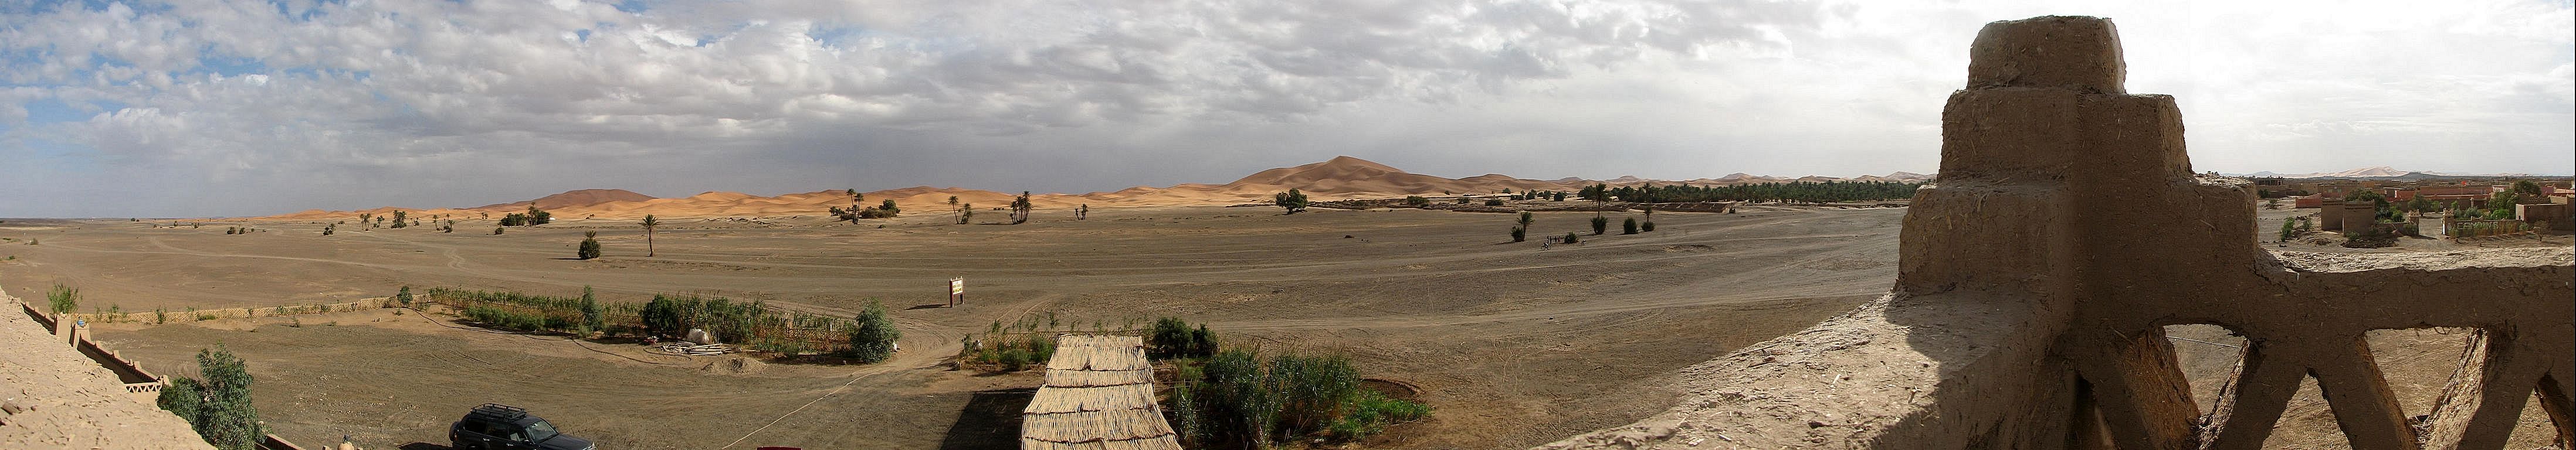 Erg Chebbi dunes seen from Nasser Palace